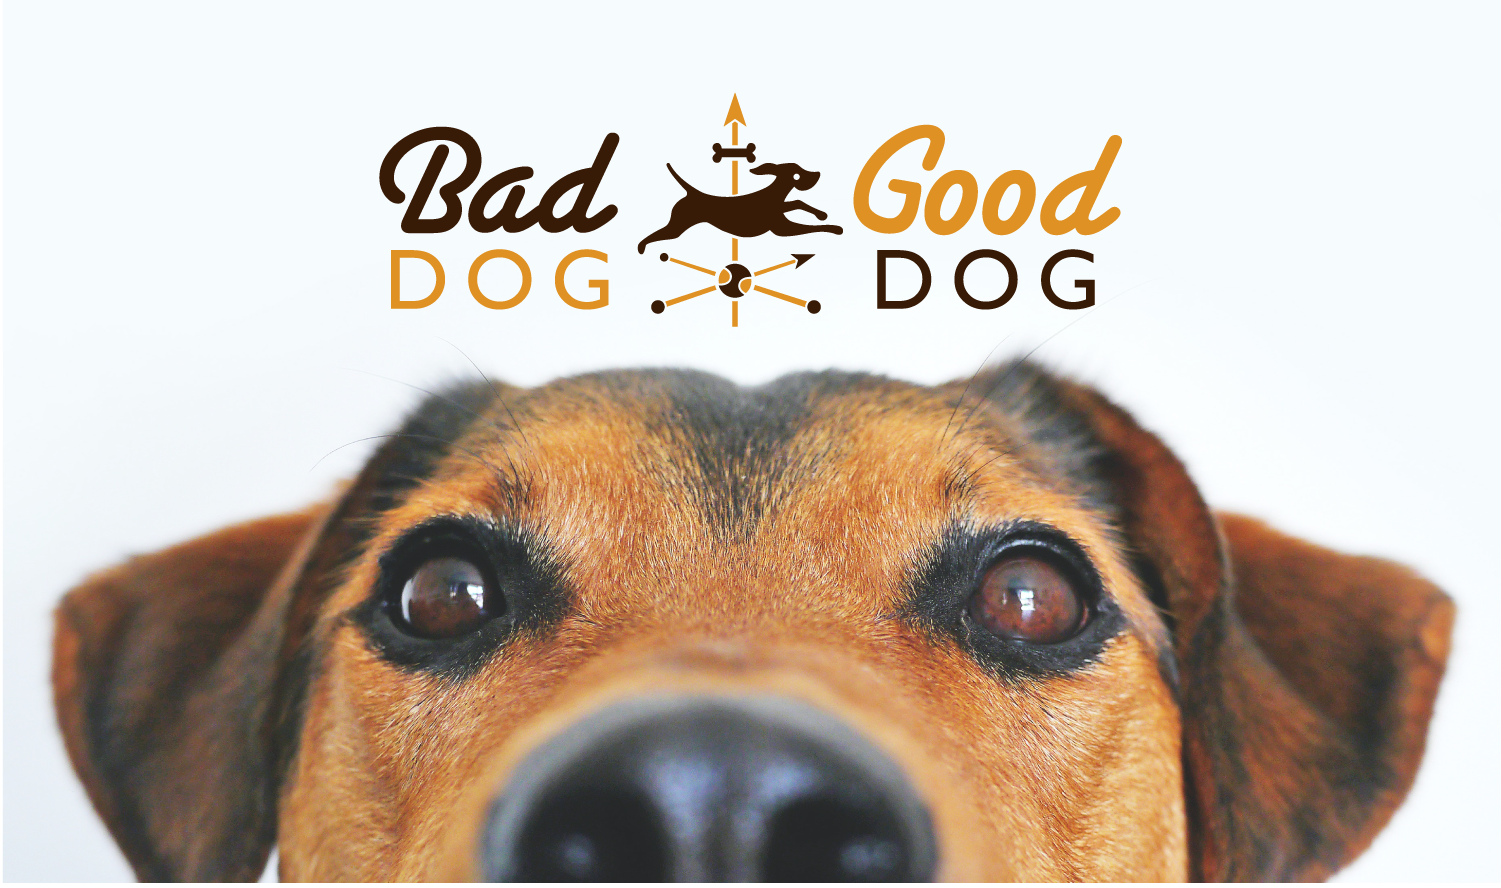 GOOD DOG, BAD DOG